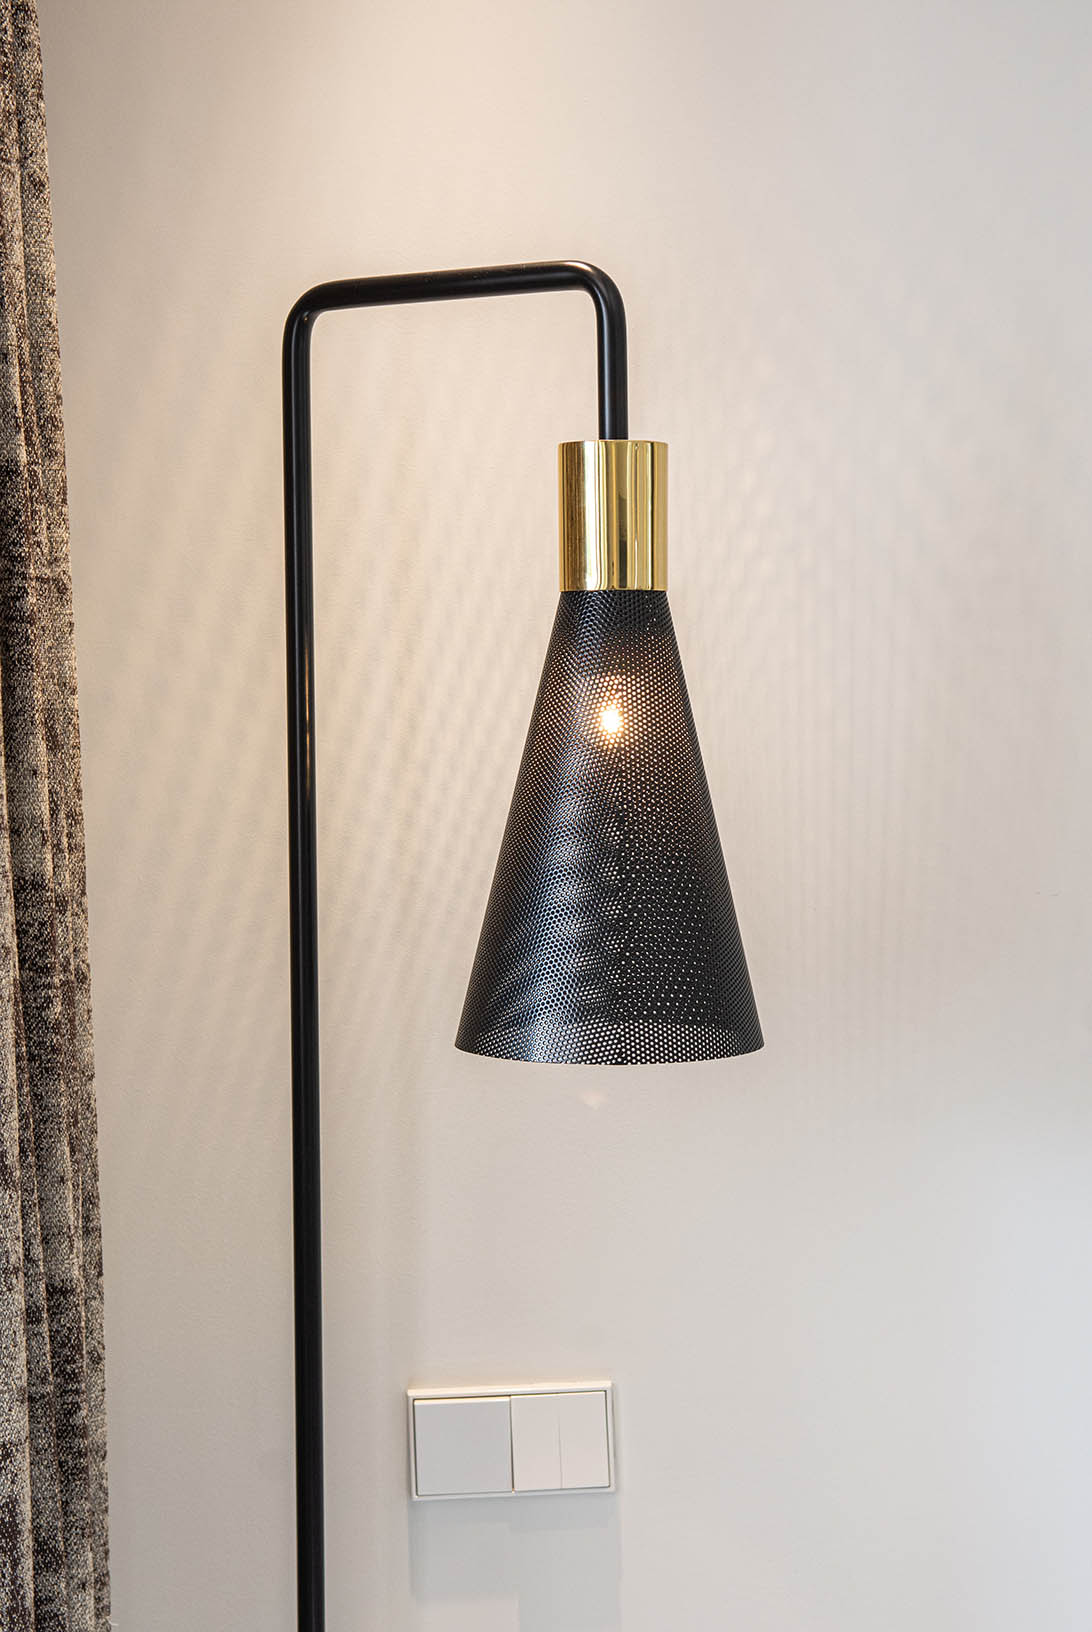 Contemporary black floor lamp and stylish interior design in Marbella